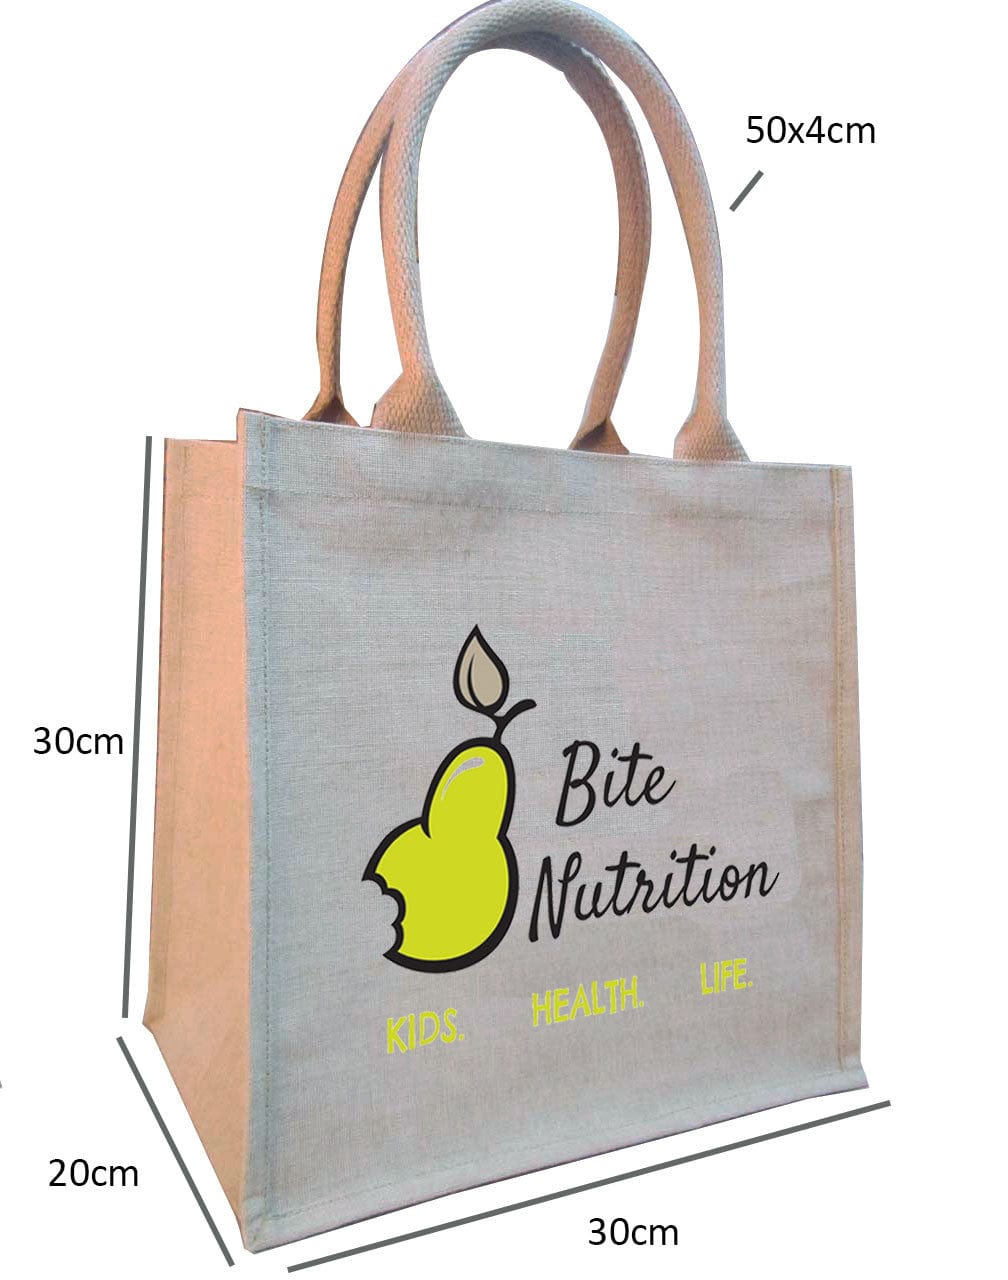 jute biodegradable shopping bag